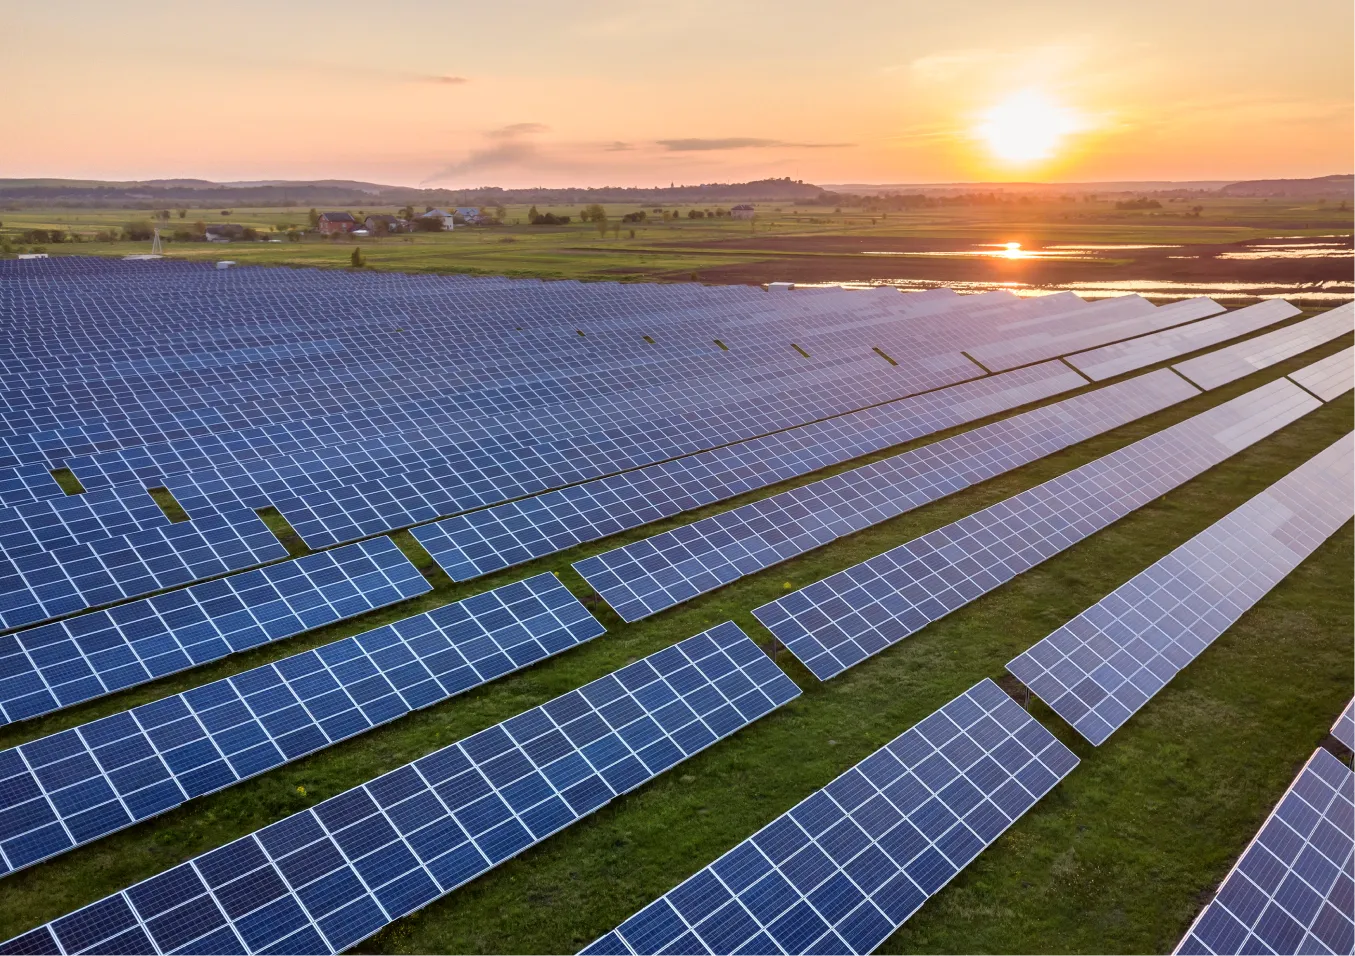 Vast solar panel farm at sunset, renewable energy landscape.